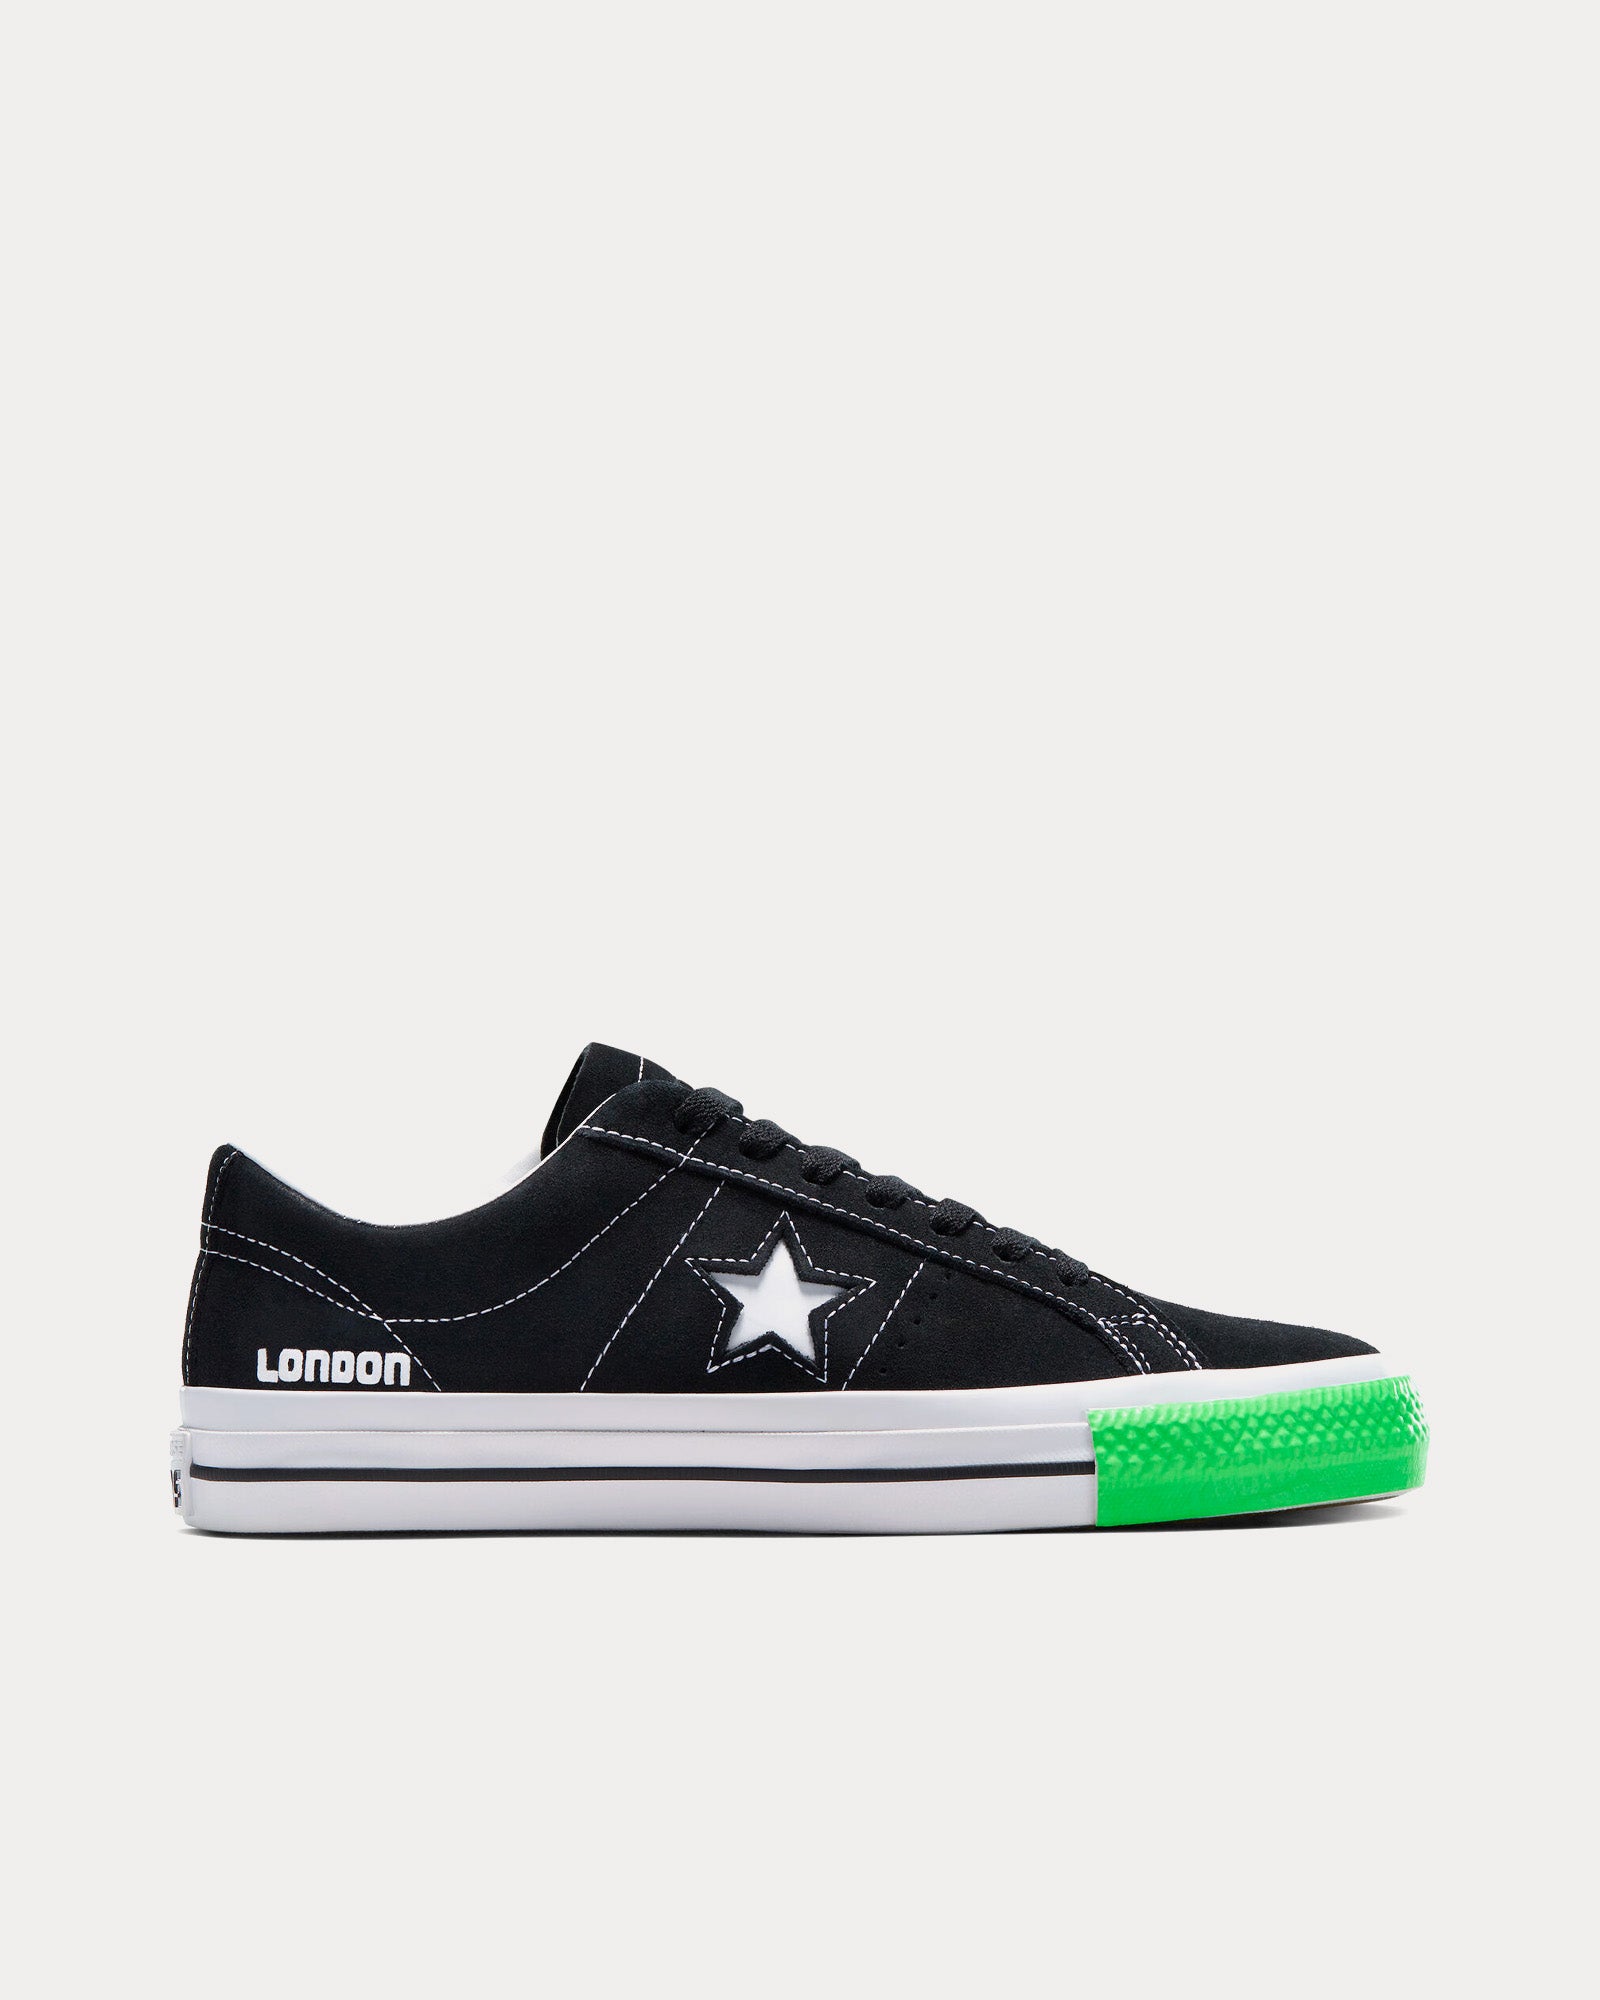 Converse - One Star Pro London Black / London Green Low Top Sneakers